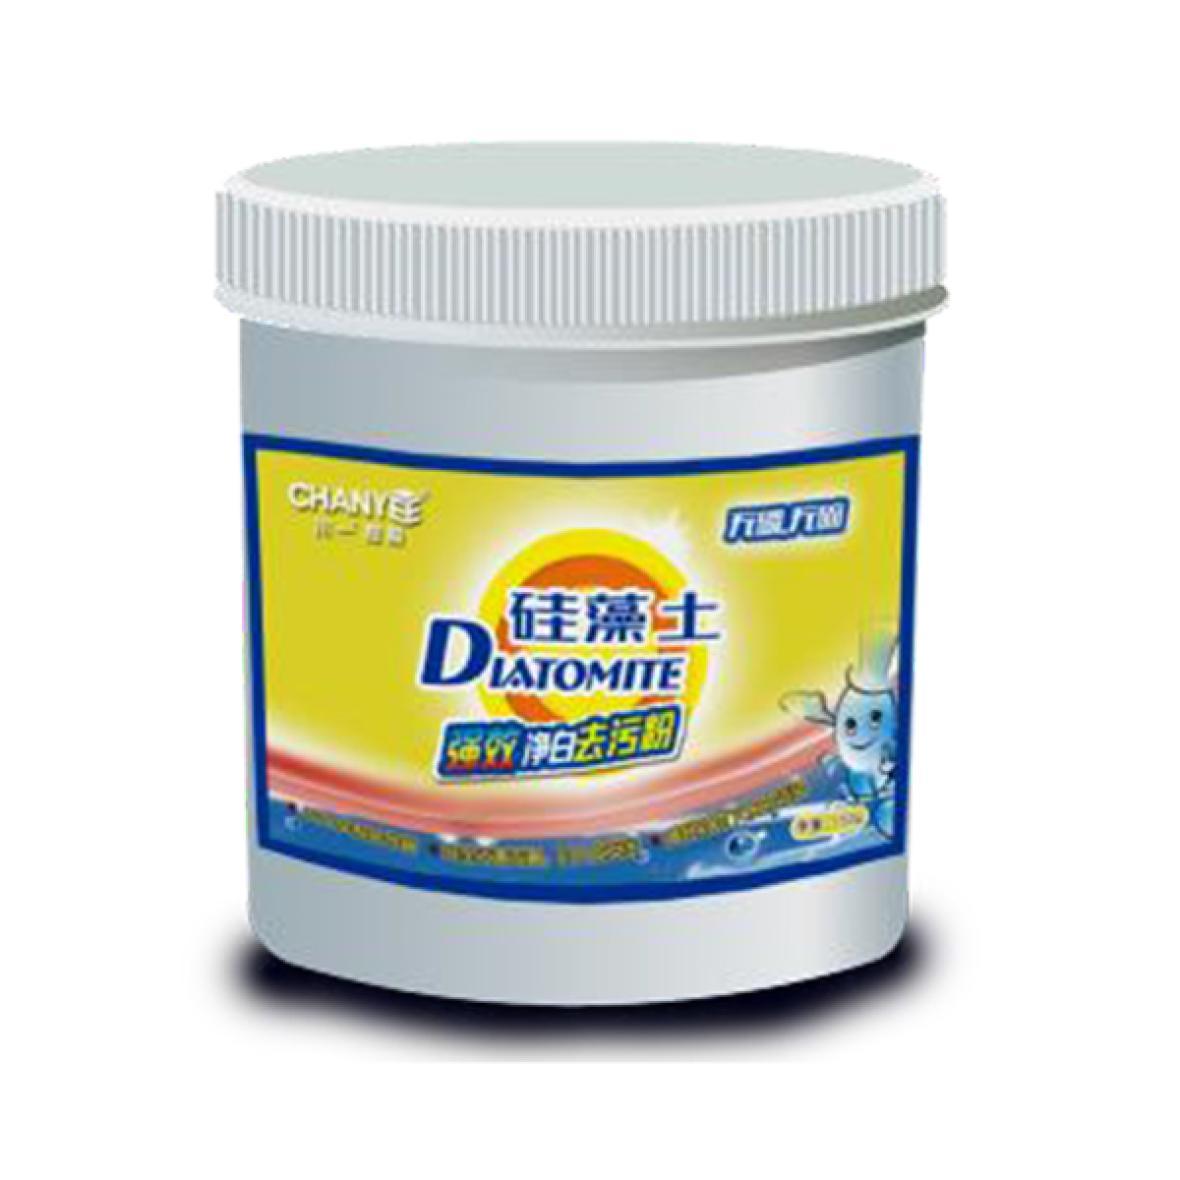 Chuan-diatomite strong whitening decontamination powder